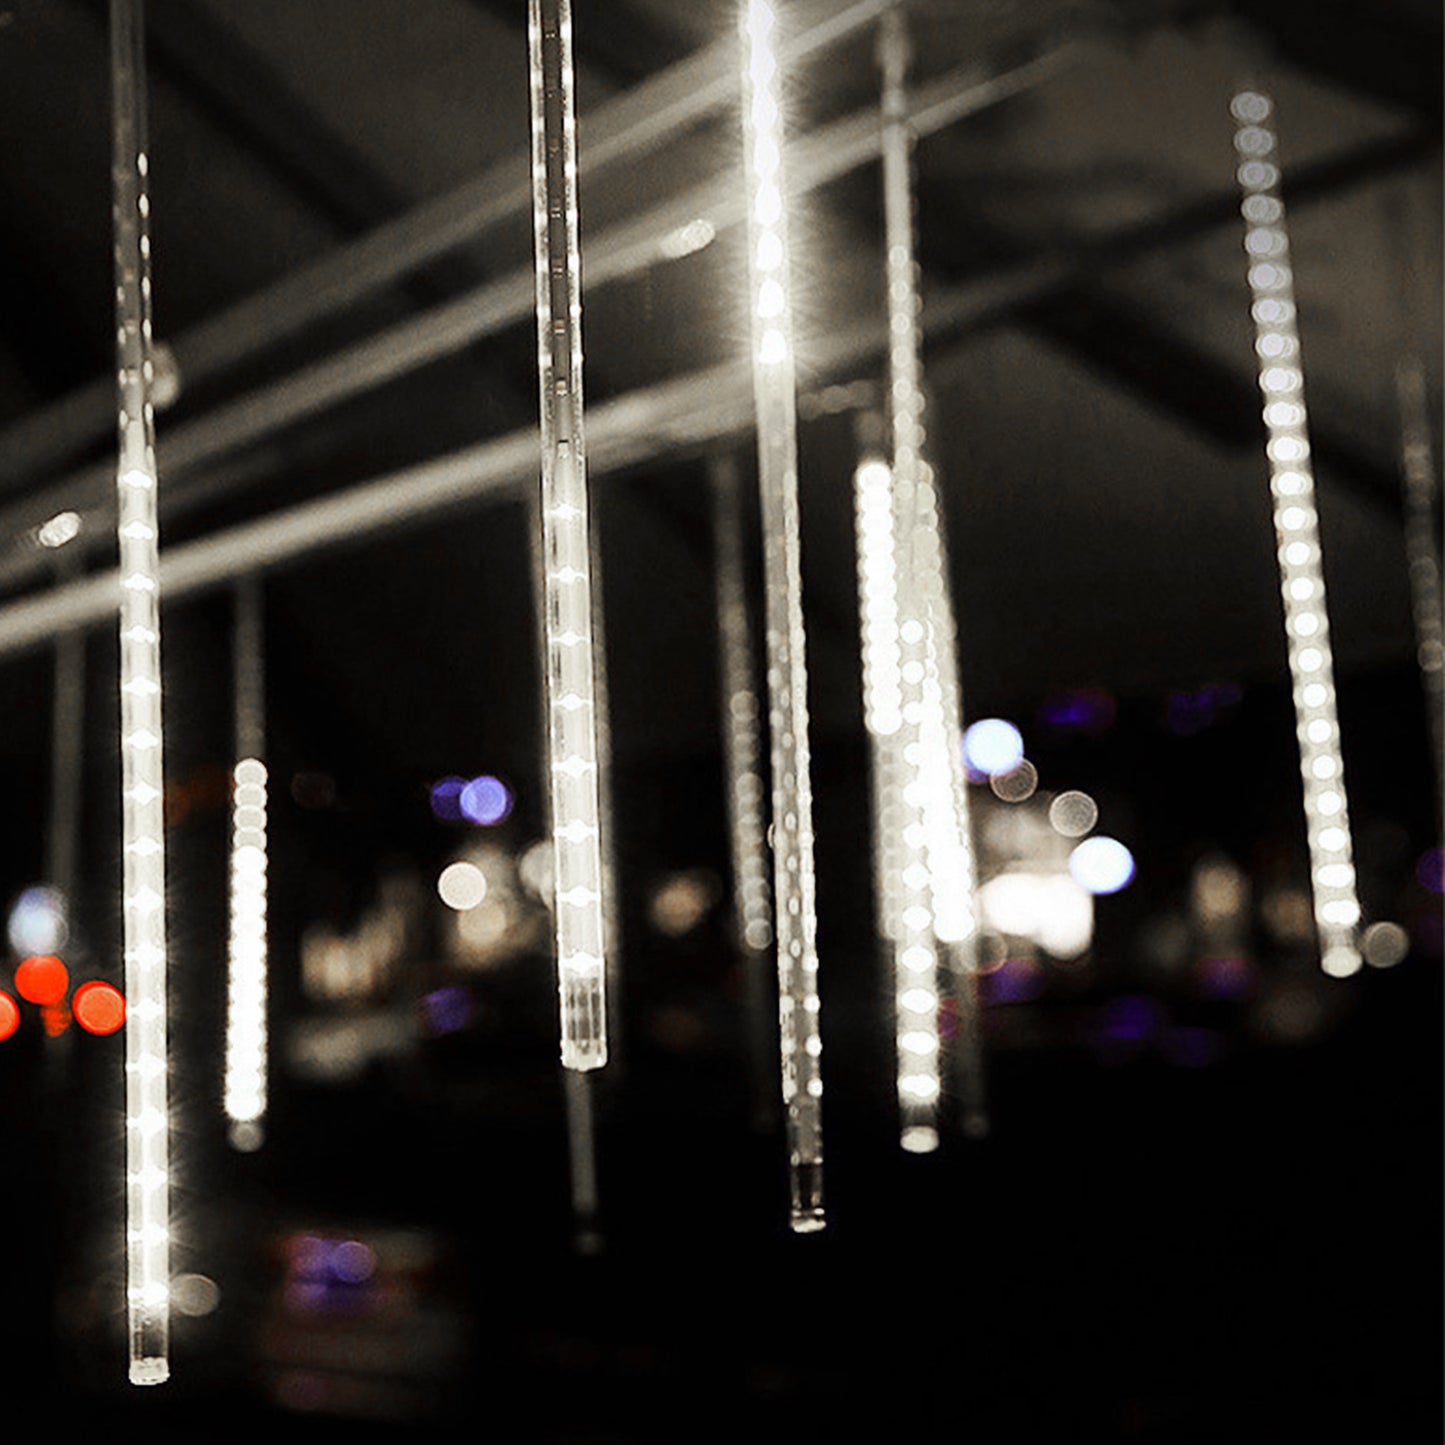 Pulg in String Lights LED Decoration Icicle Lights Outdoor Meteor Shower Rain Lights